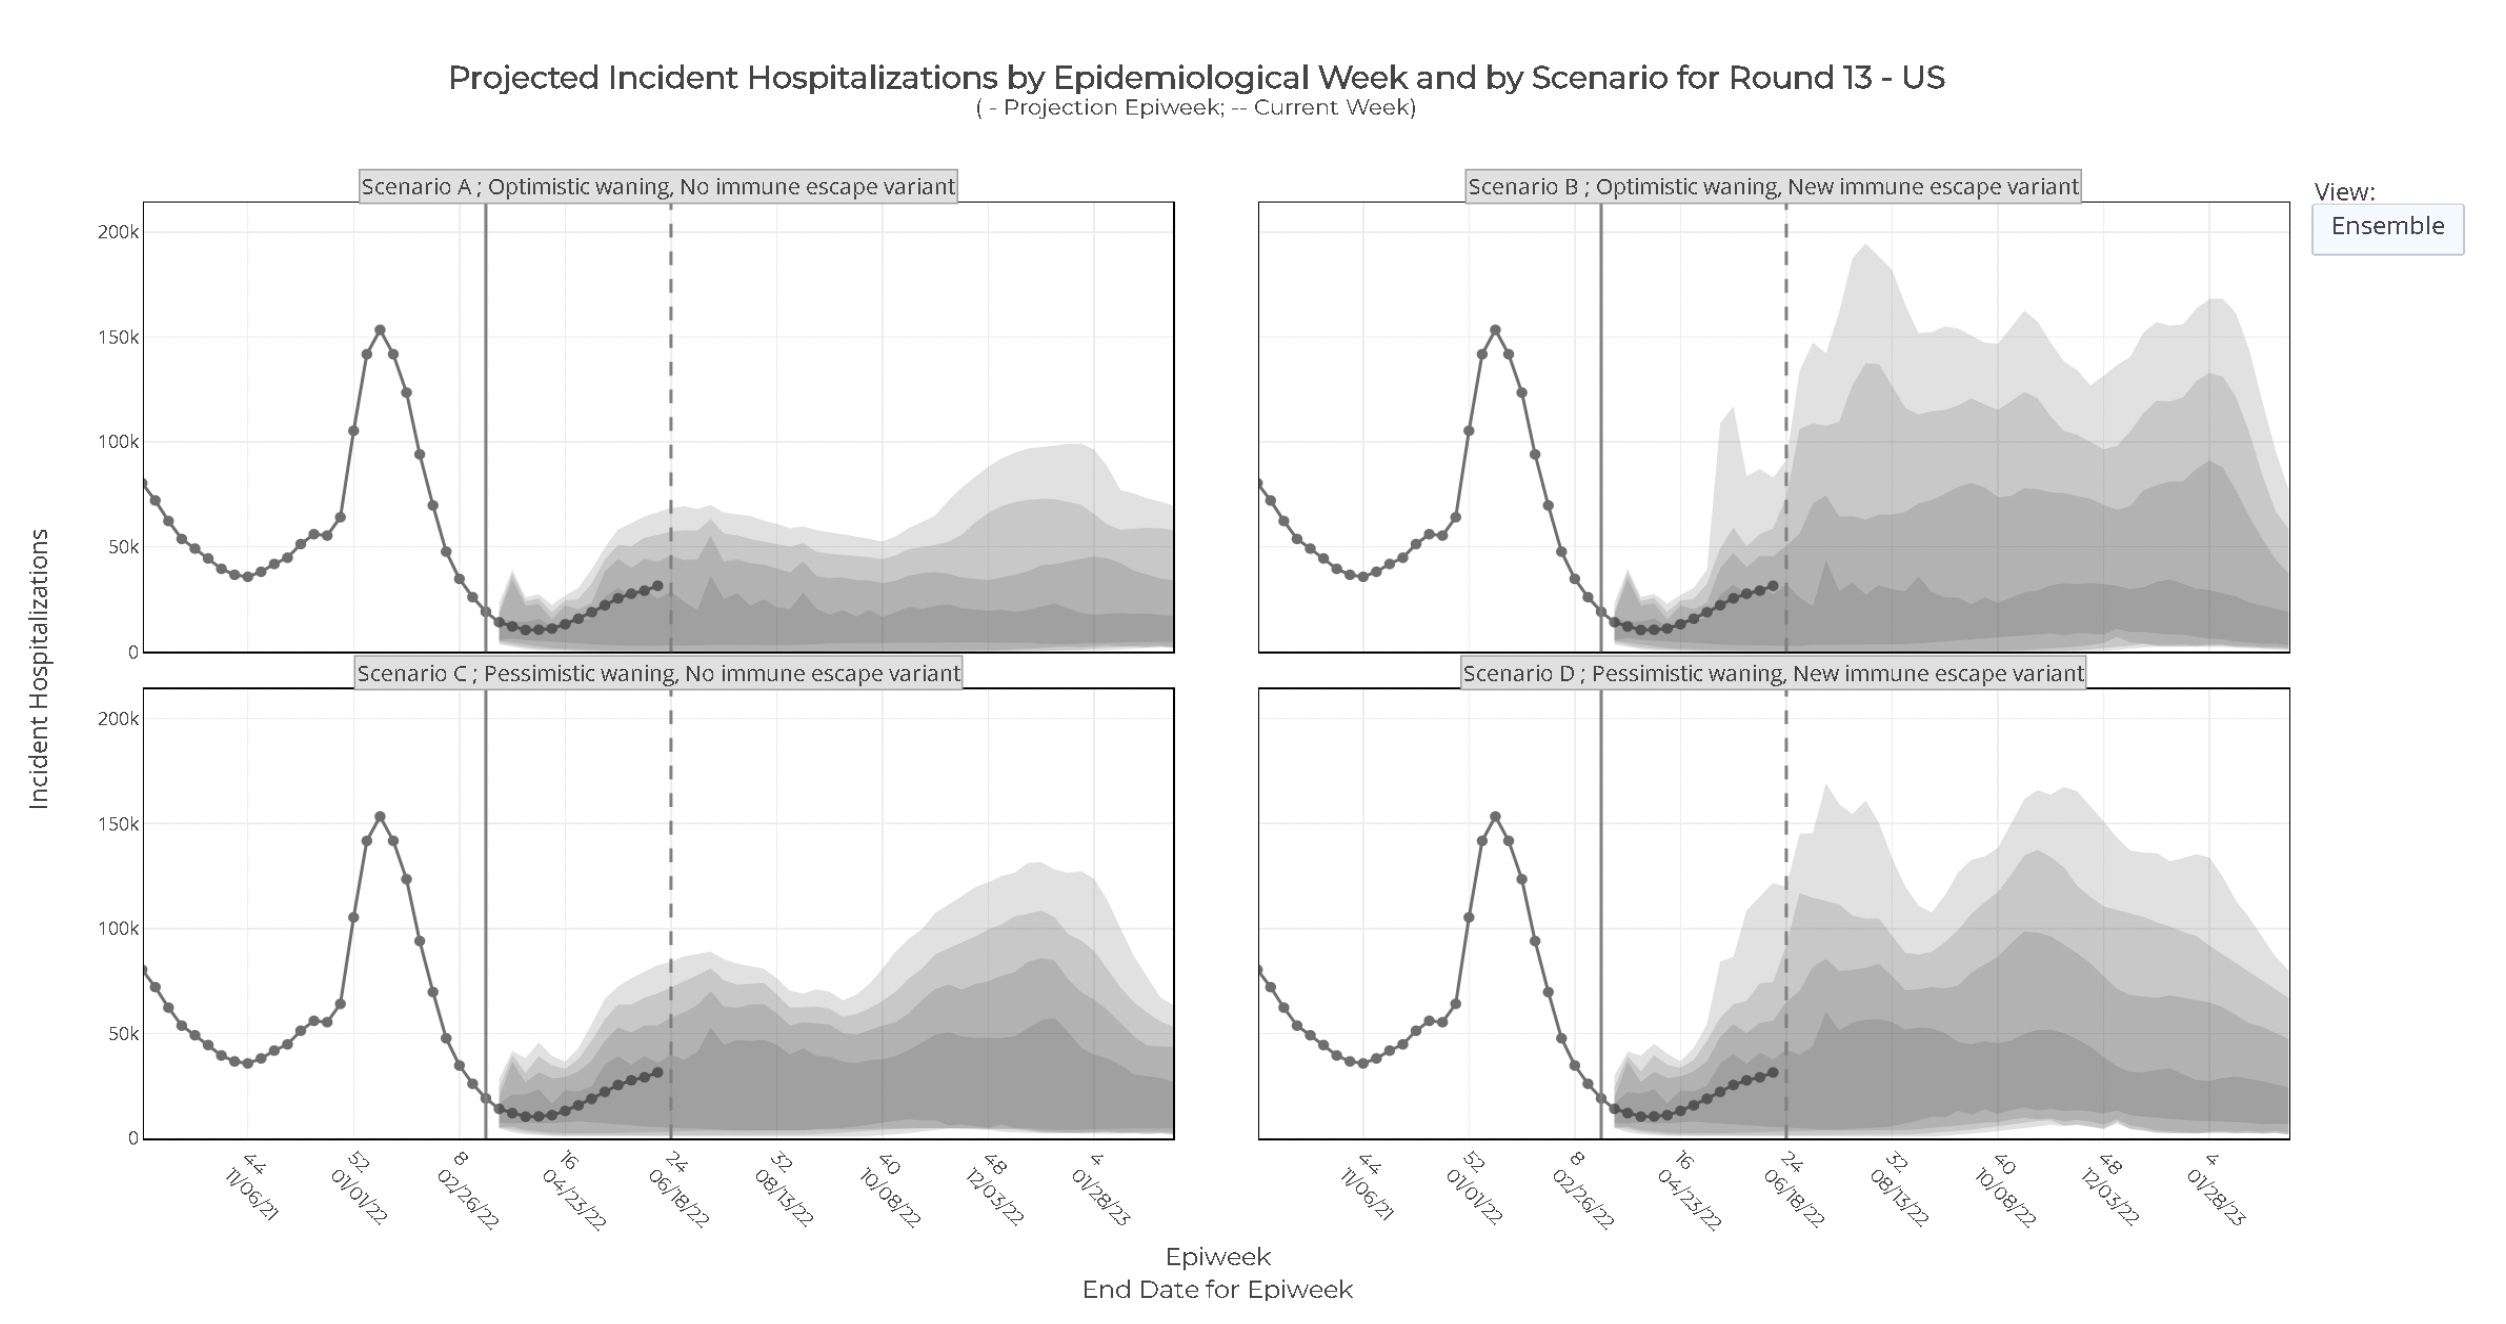 Lessler @ VRBPAC: Ensemble predictions of hospitalizations